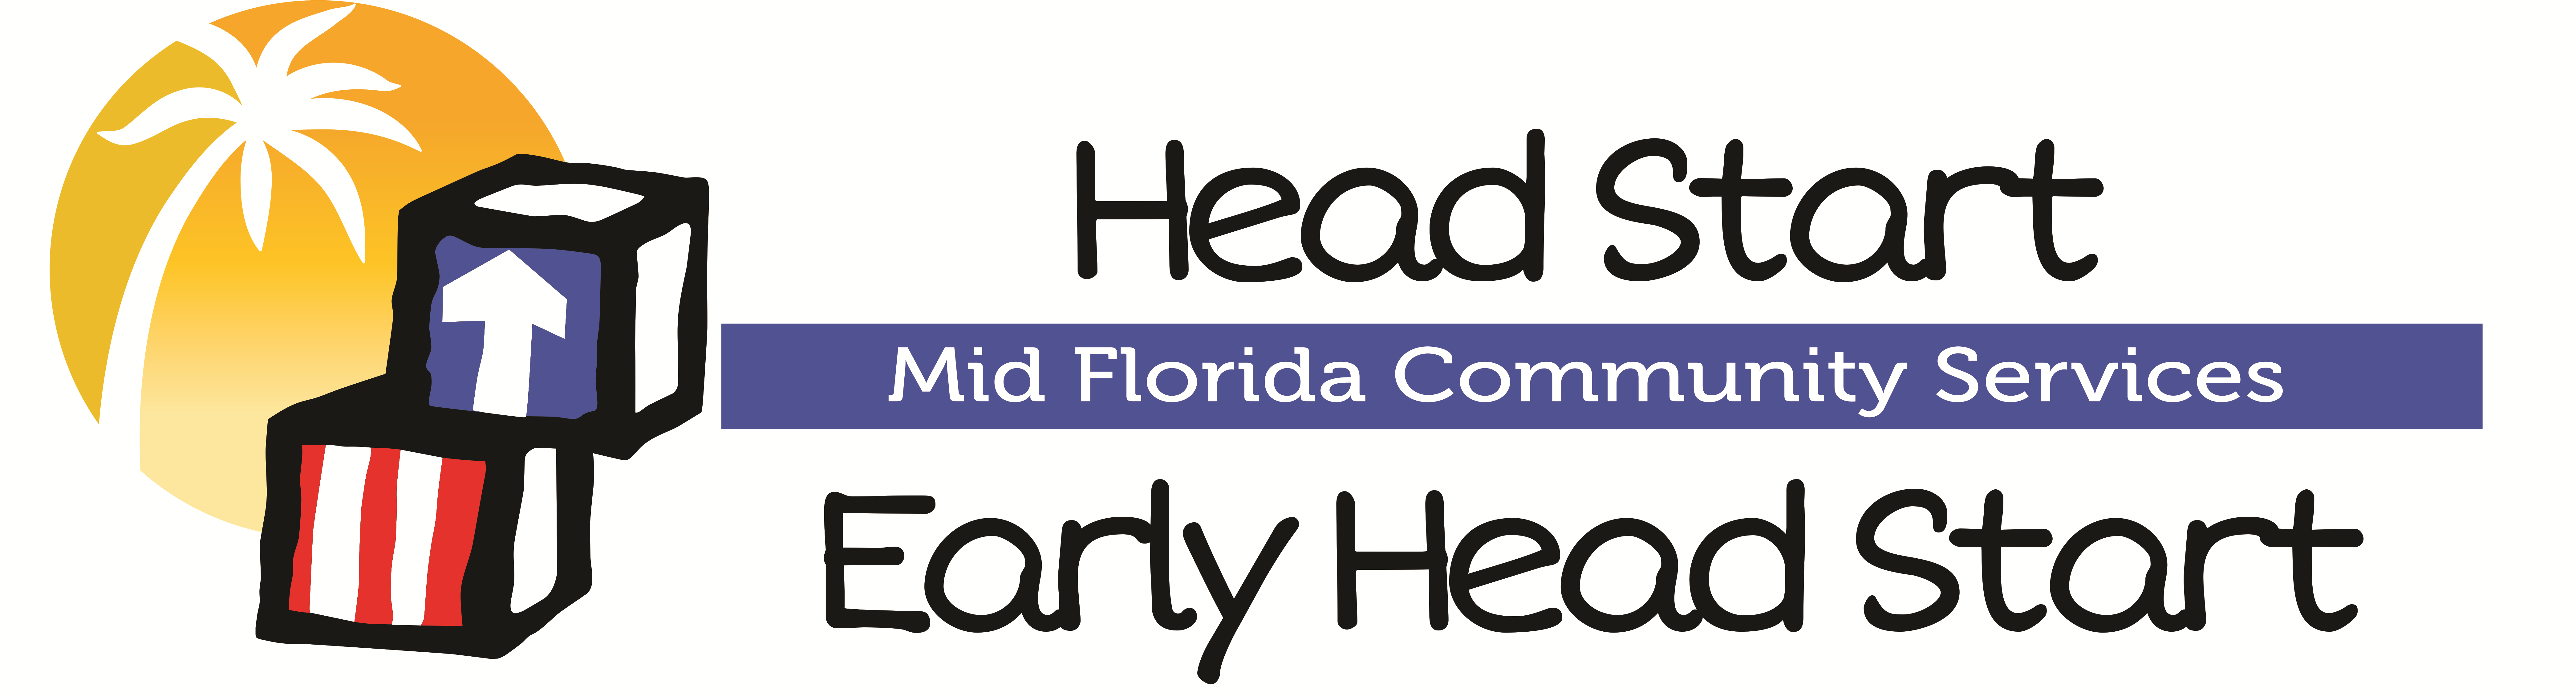 Mid Florida Community Services, Inc's Logo